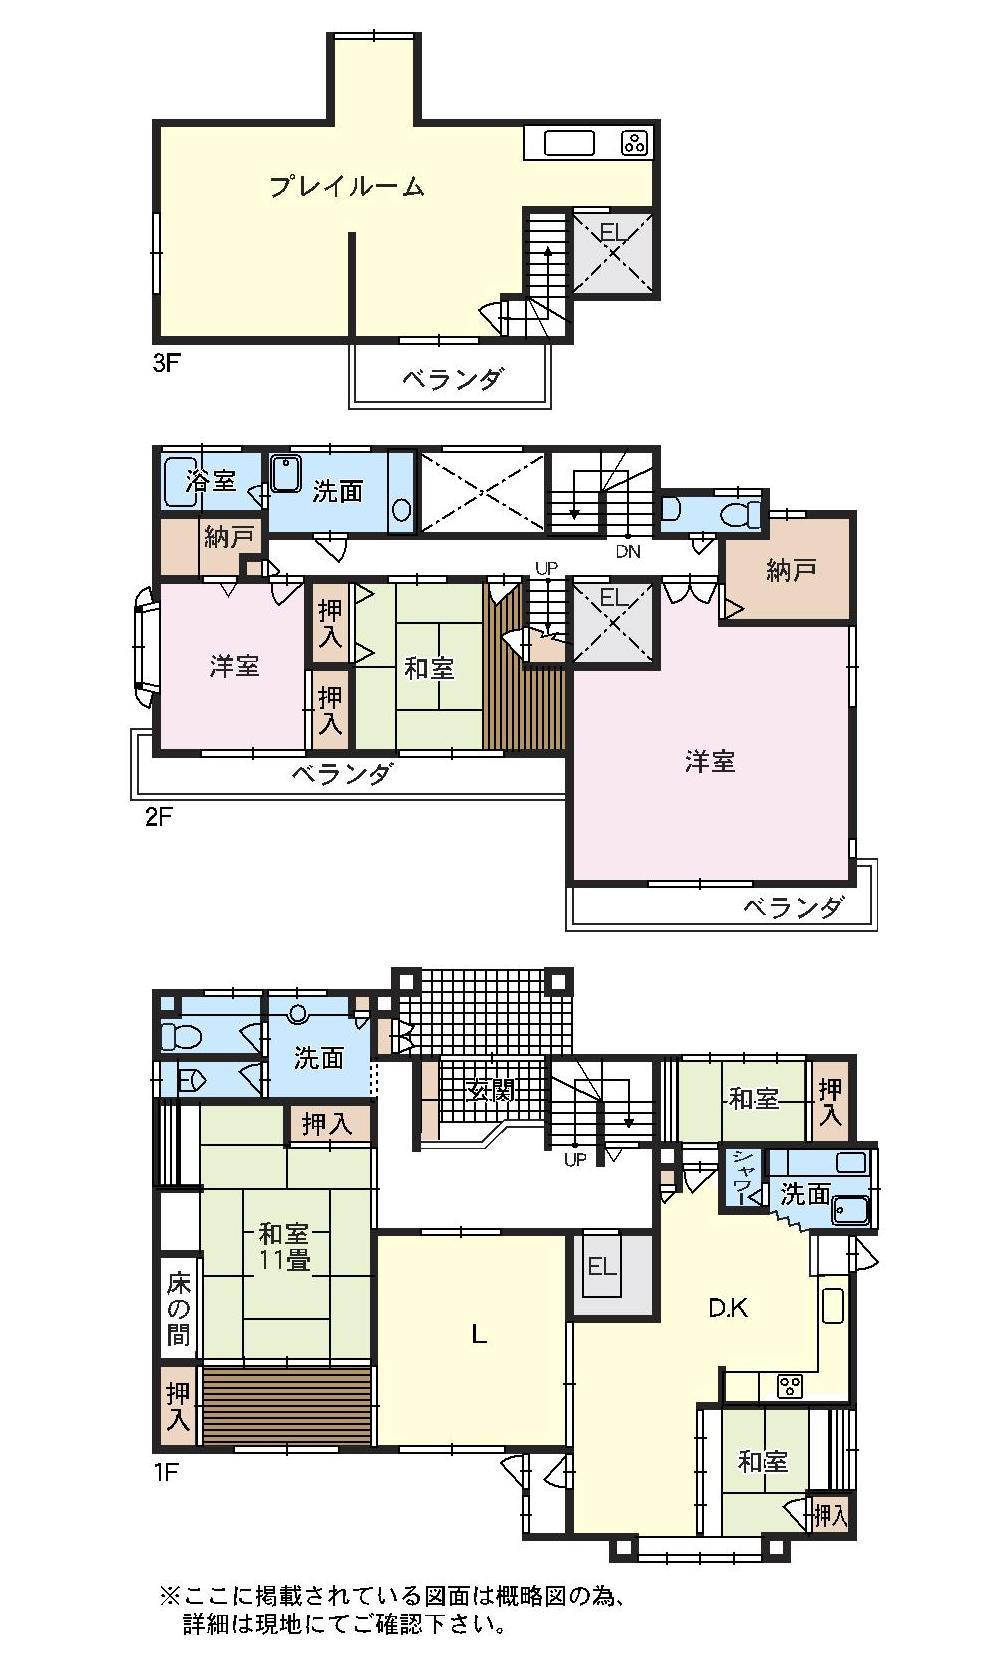 Floor plan. 45 million yen, 6LDK + S (storeroom), Land area 791.9 sq m , Building area 306.78 sq m